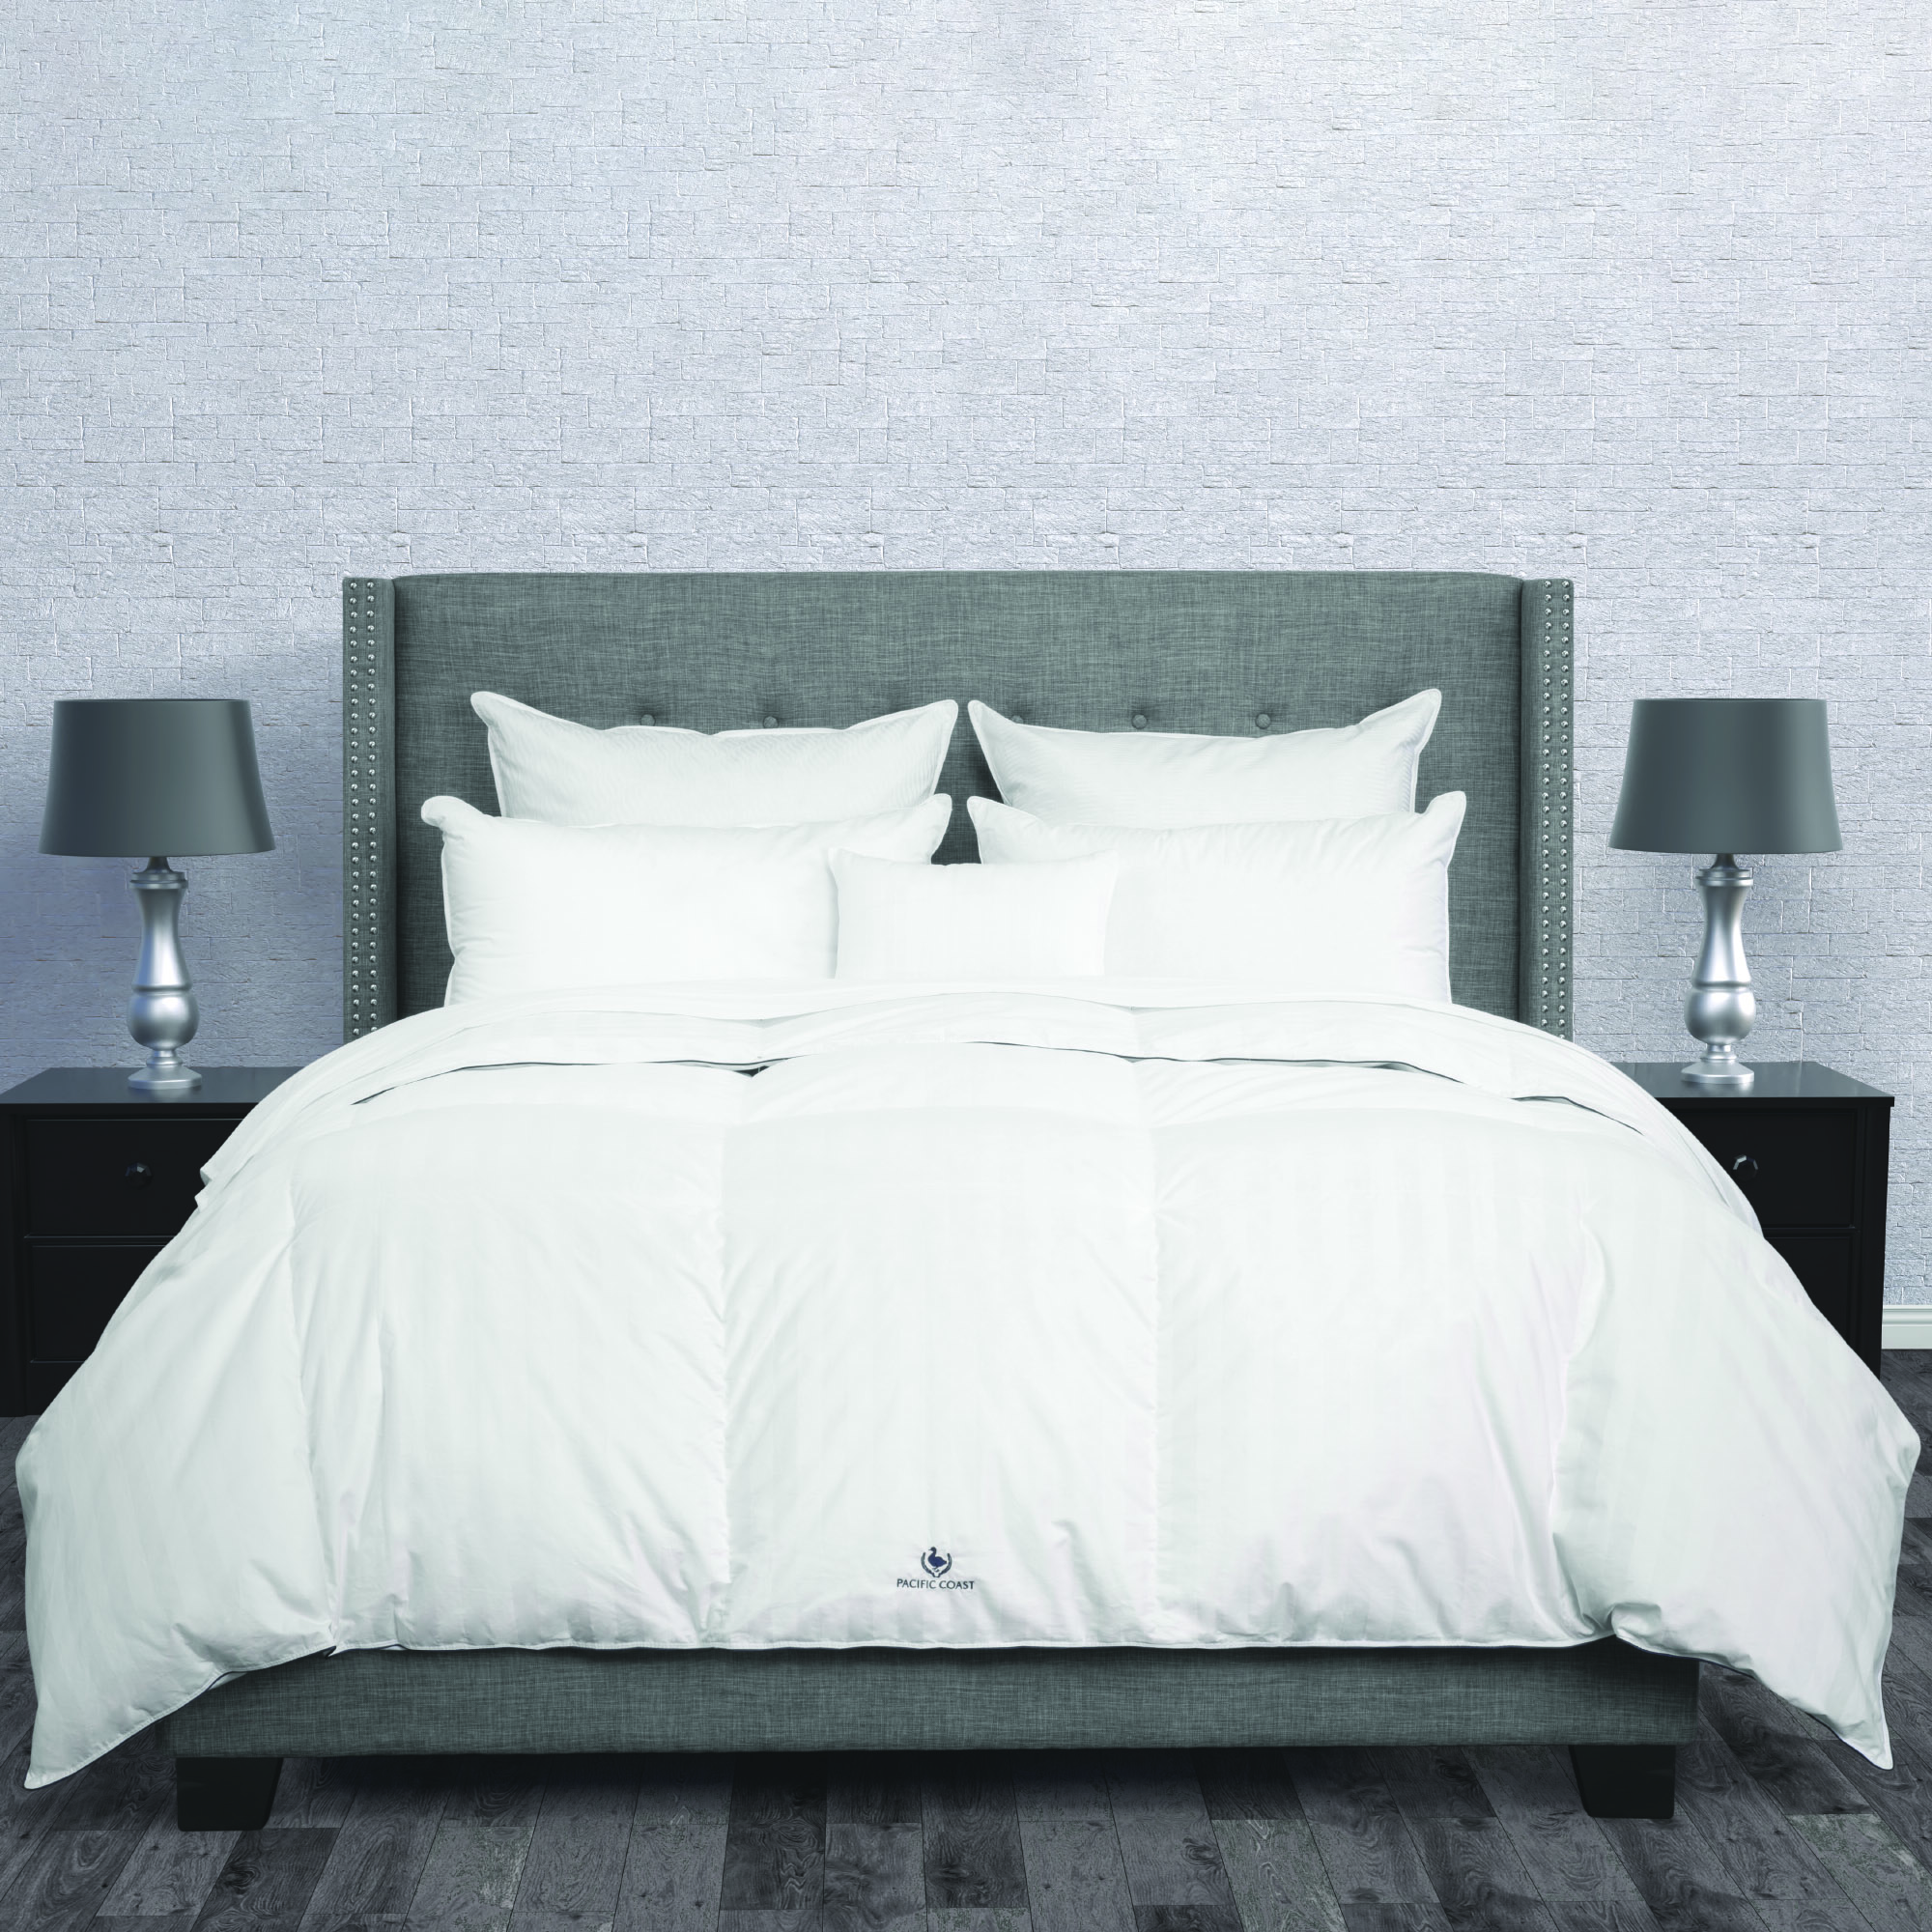 Image of Deluxe Comforter | Pacific Coast Bedding